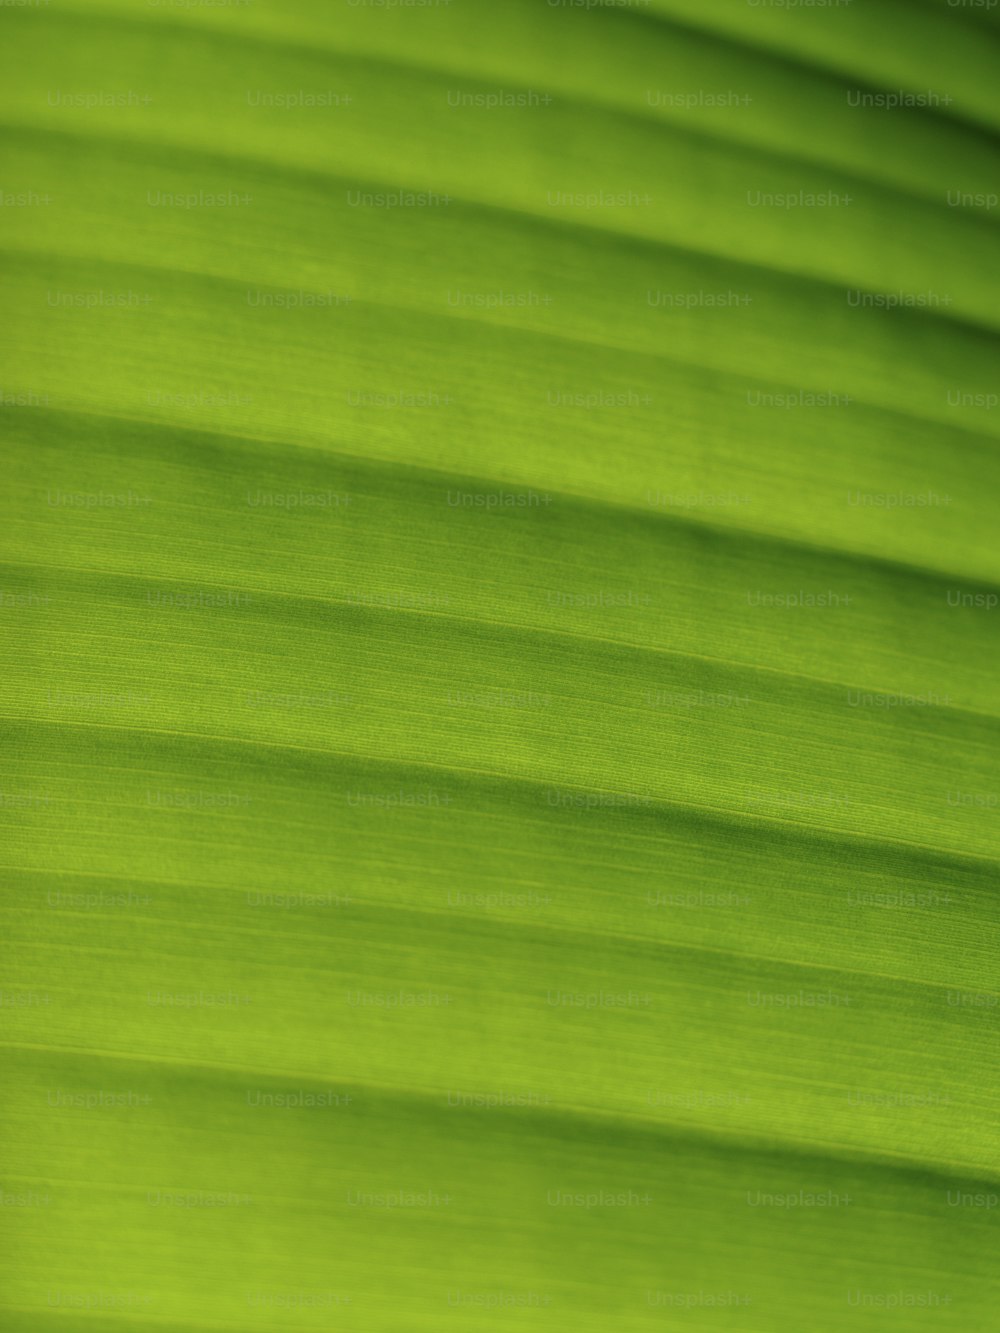 a close up of a green banana leaf